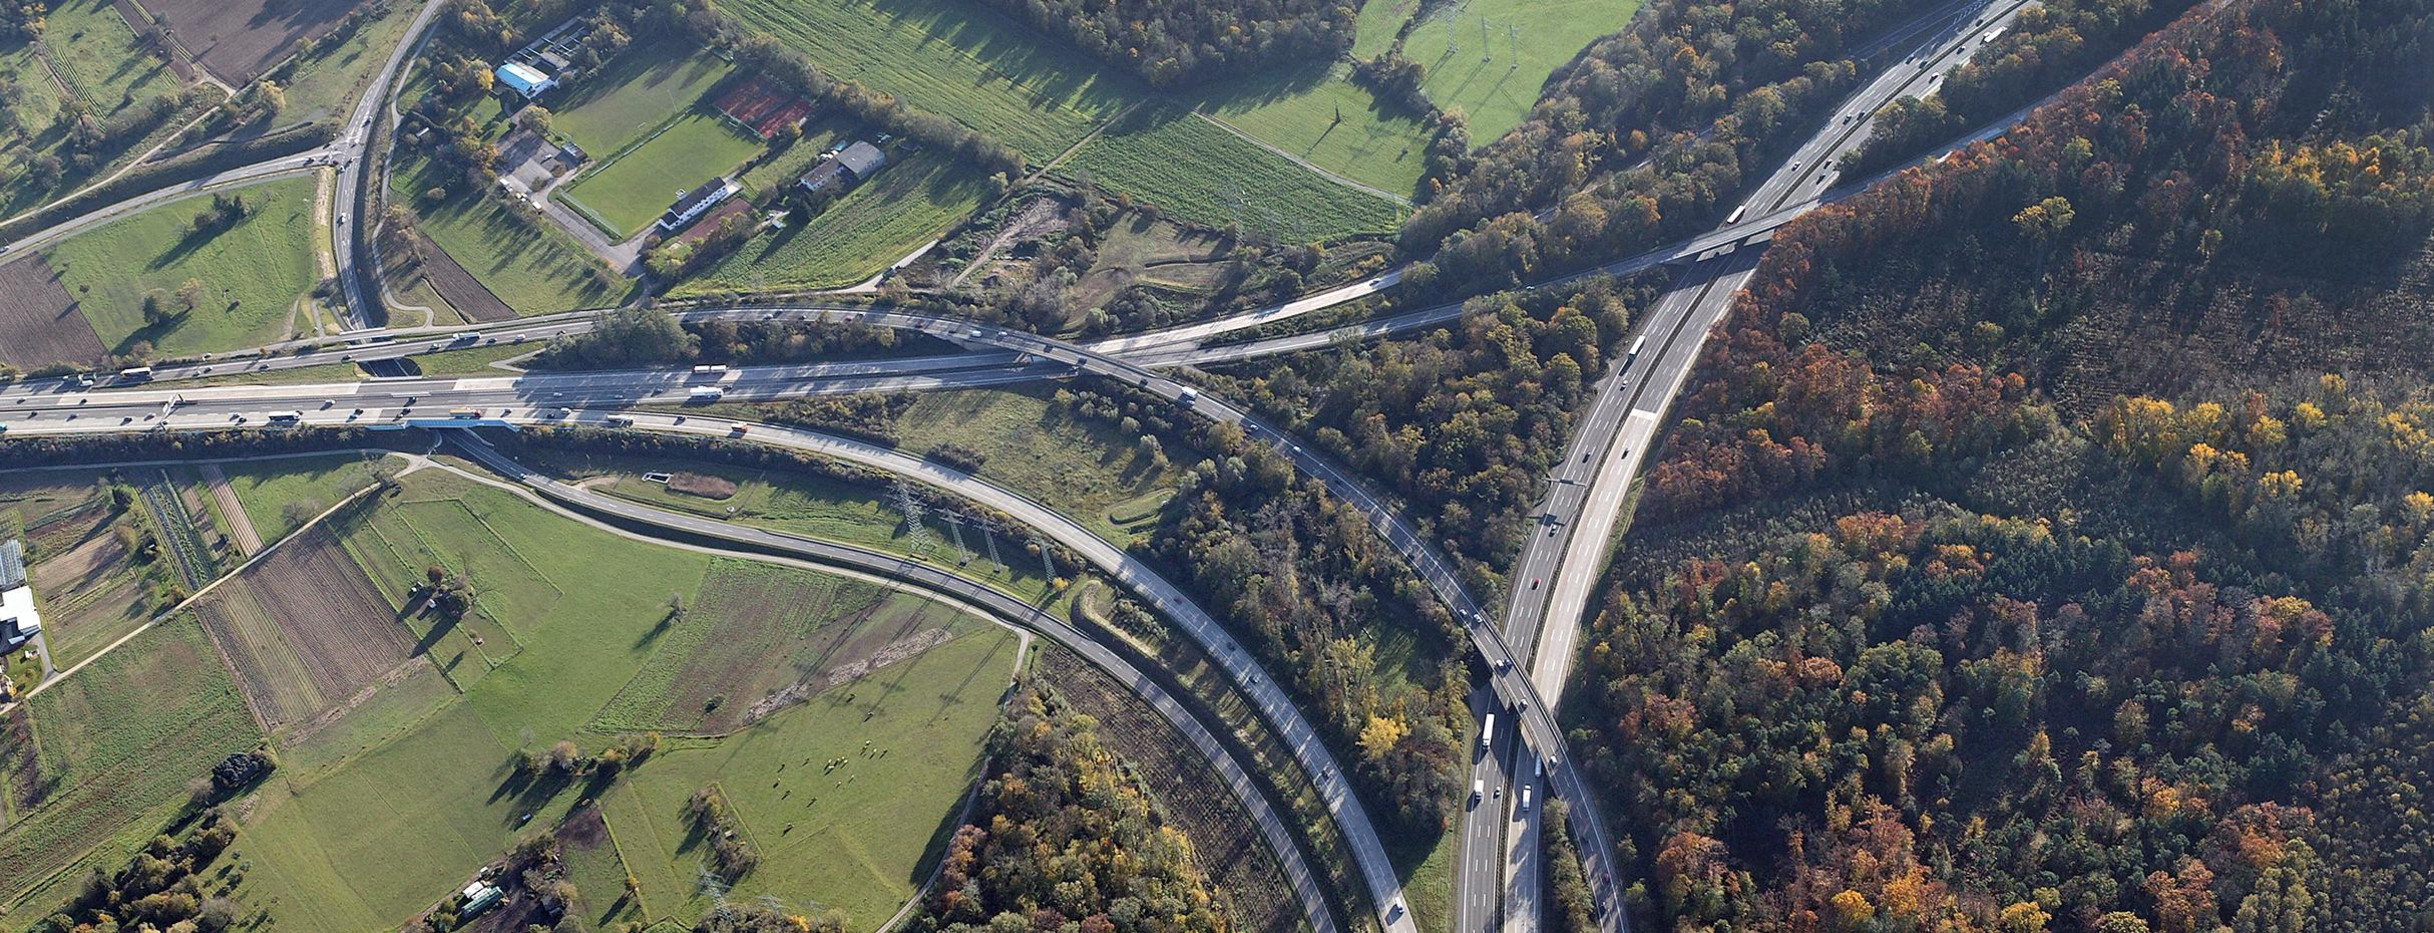 Autobahnknoten A5/A8 bei Karlsruhe (Bild: Manfred Grohe)